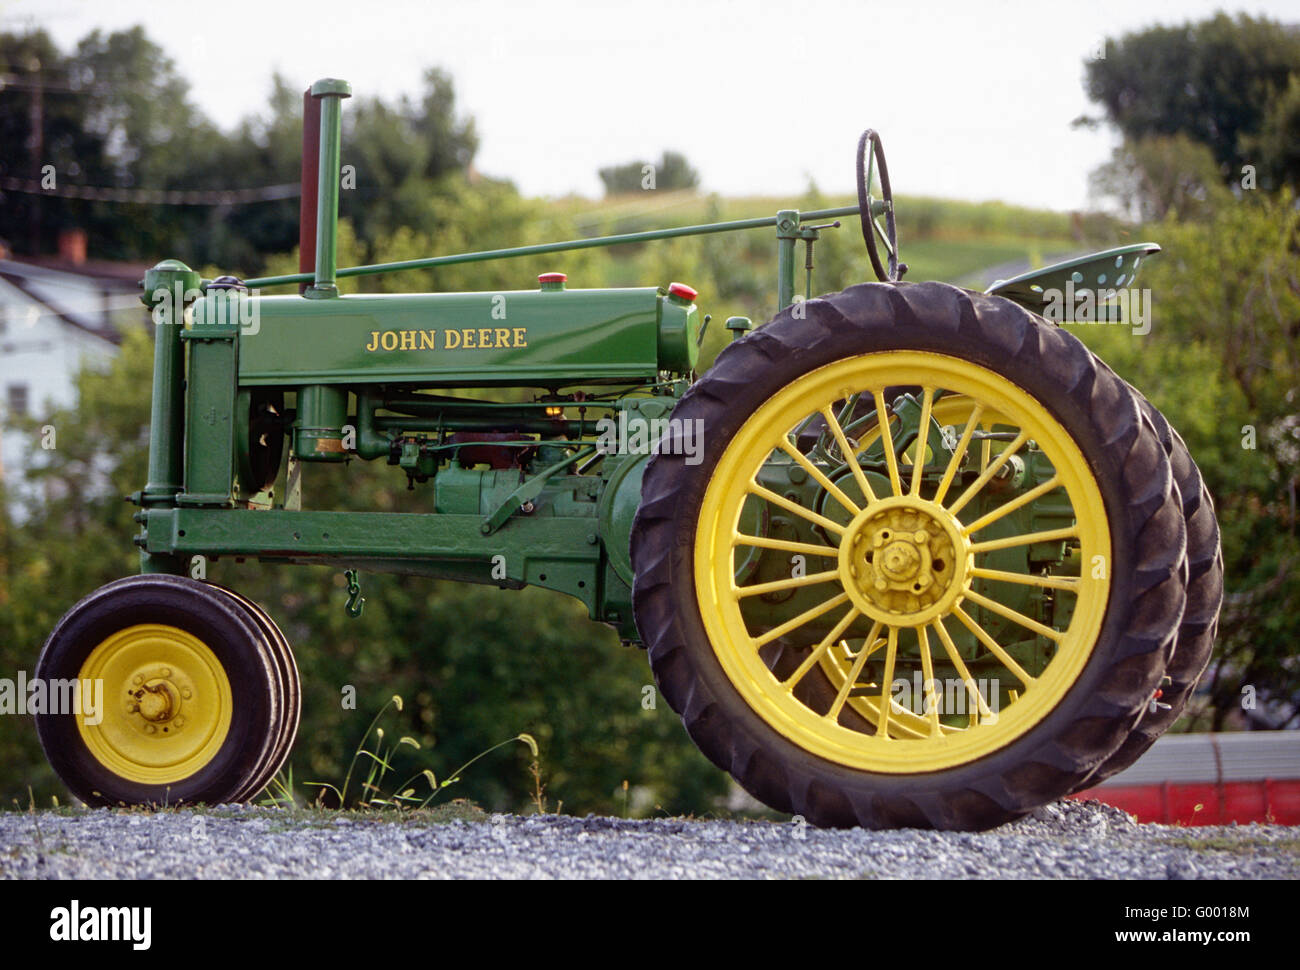 Mint condition antique John Deere tractor on central Pennsylvania farm Stock Photo